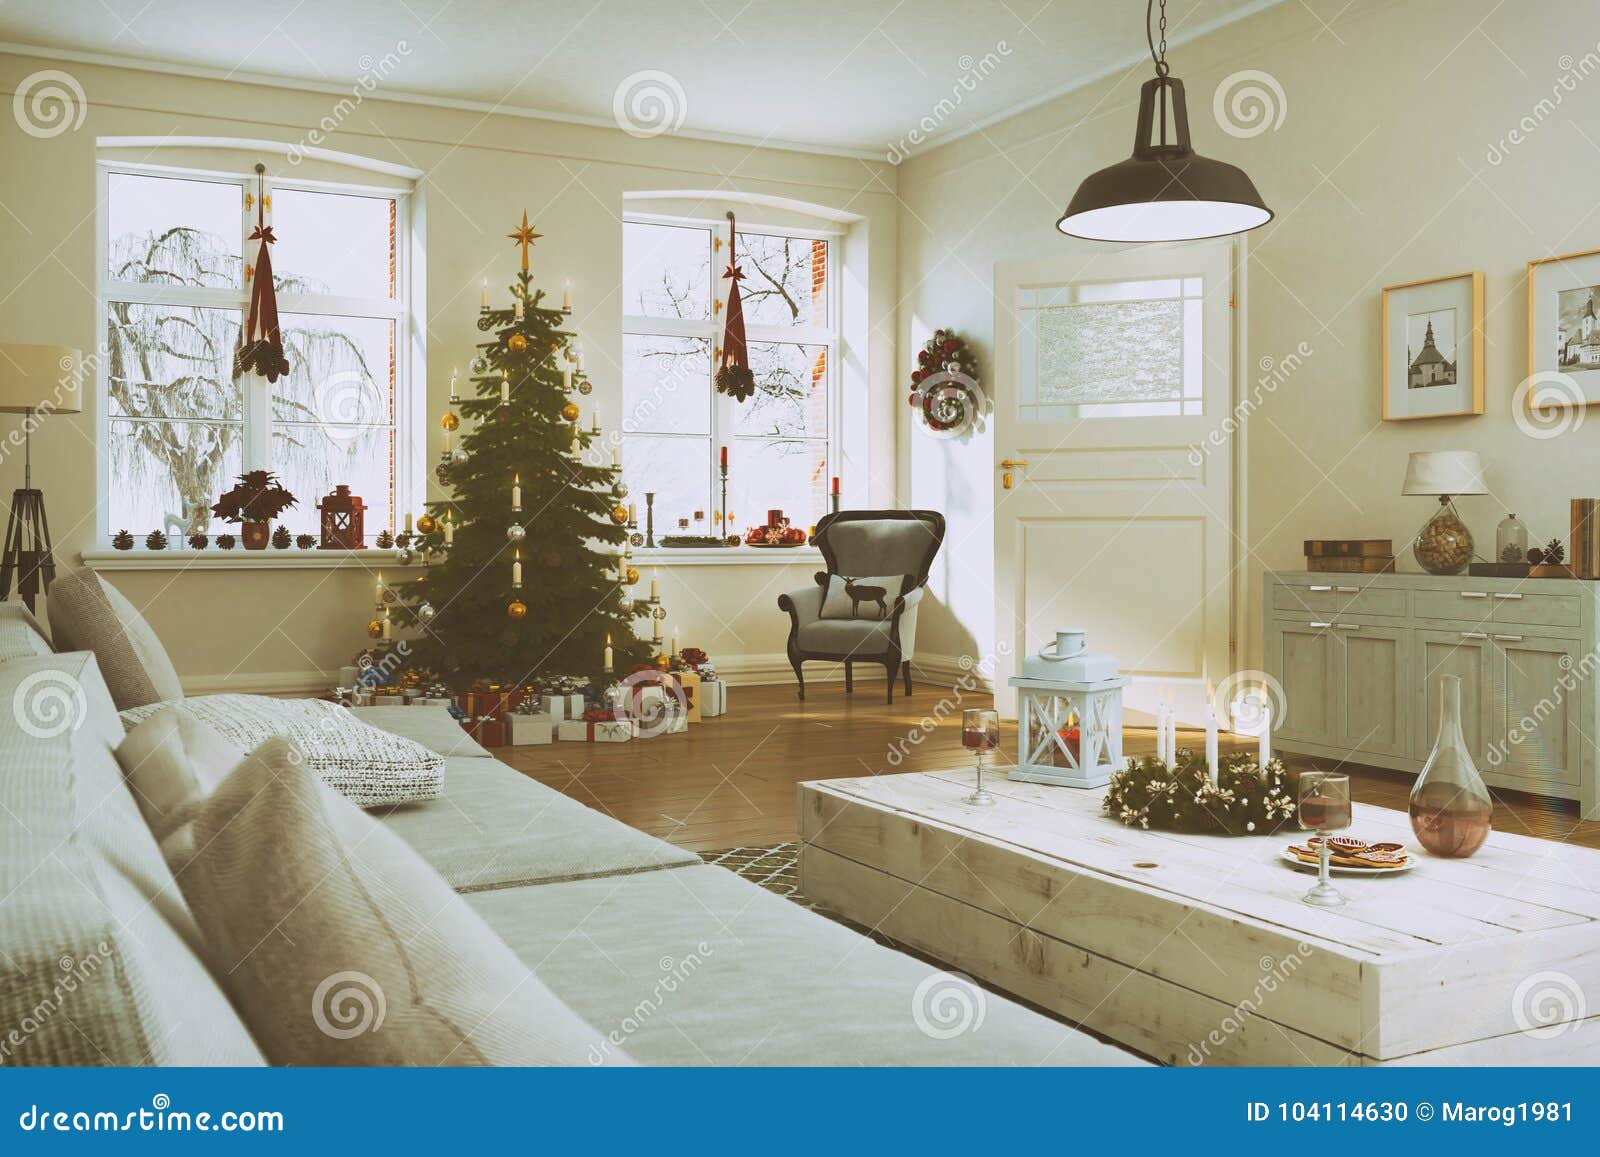 d render nordic living room christmas tree retro lo decoration look